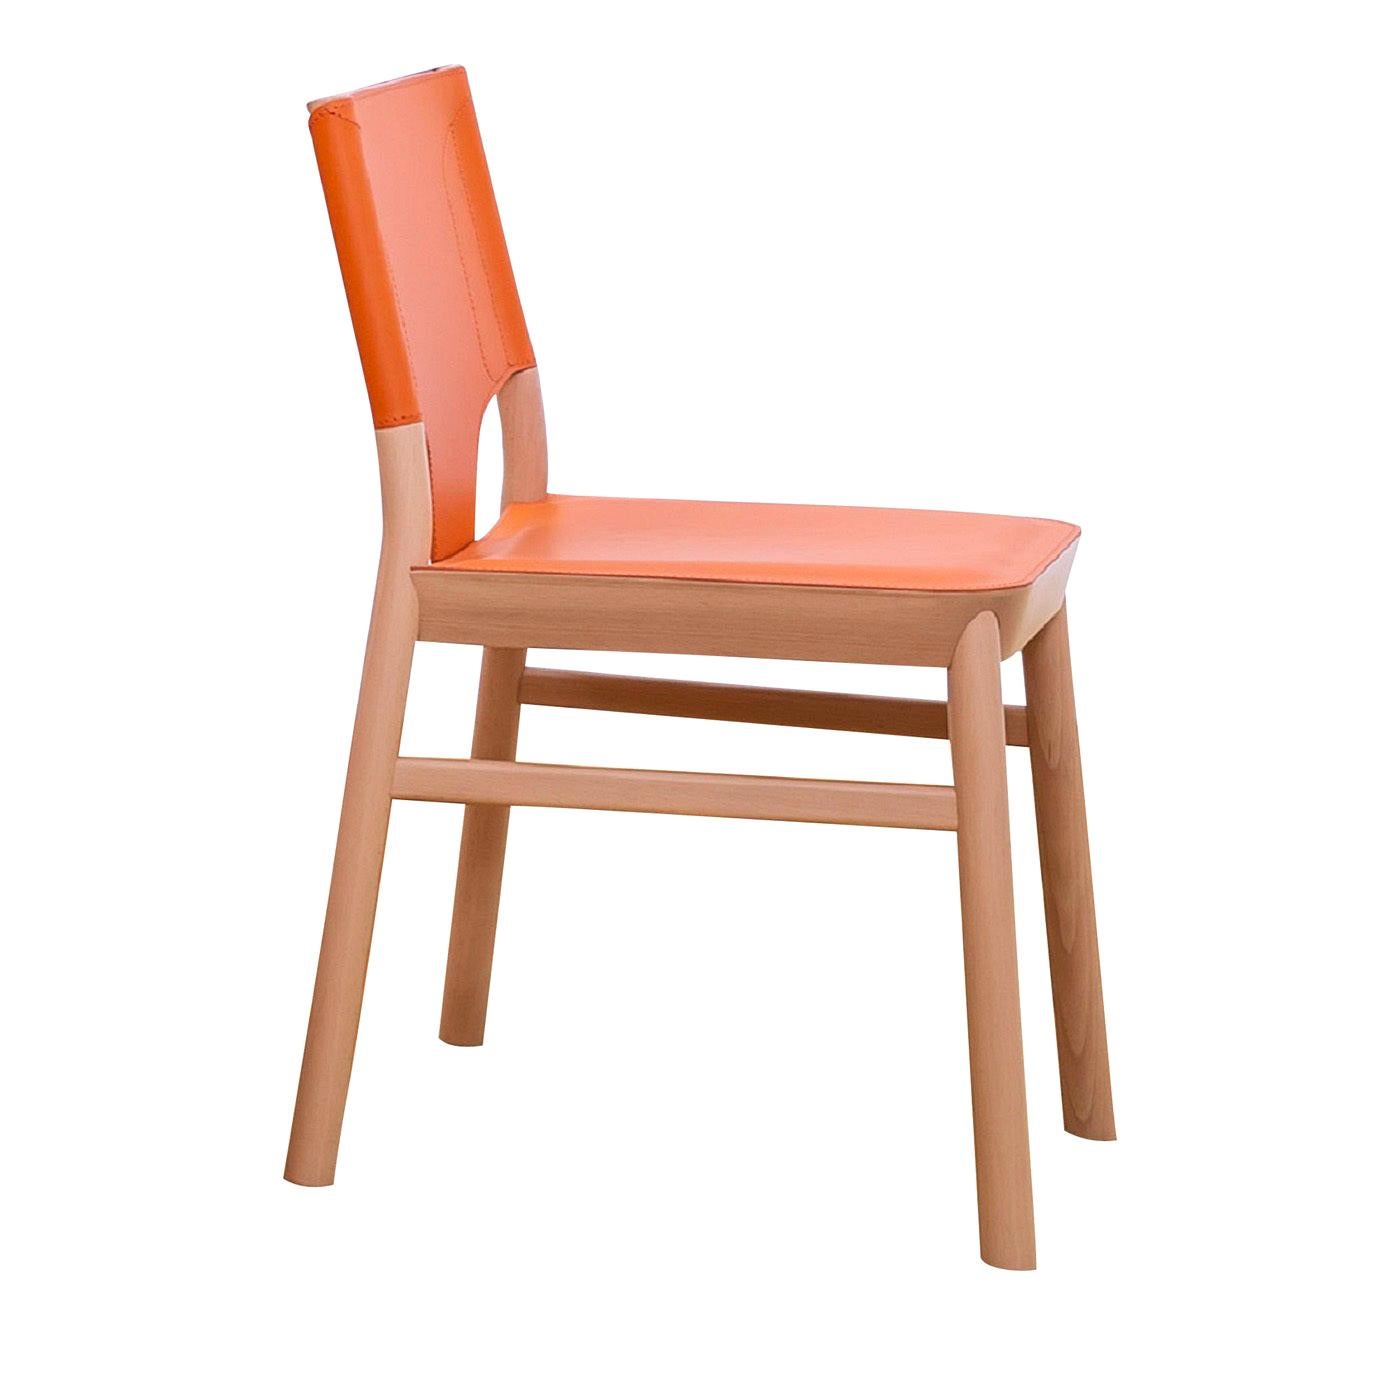 Marimba Dining Chair by Emilio Nanni